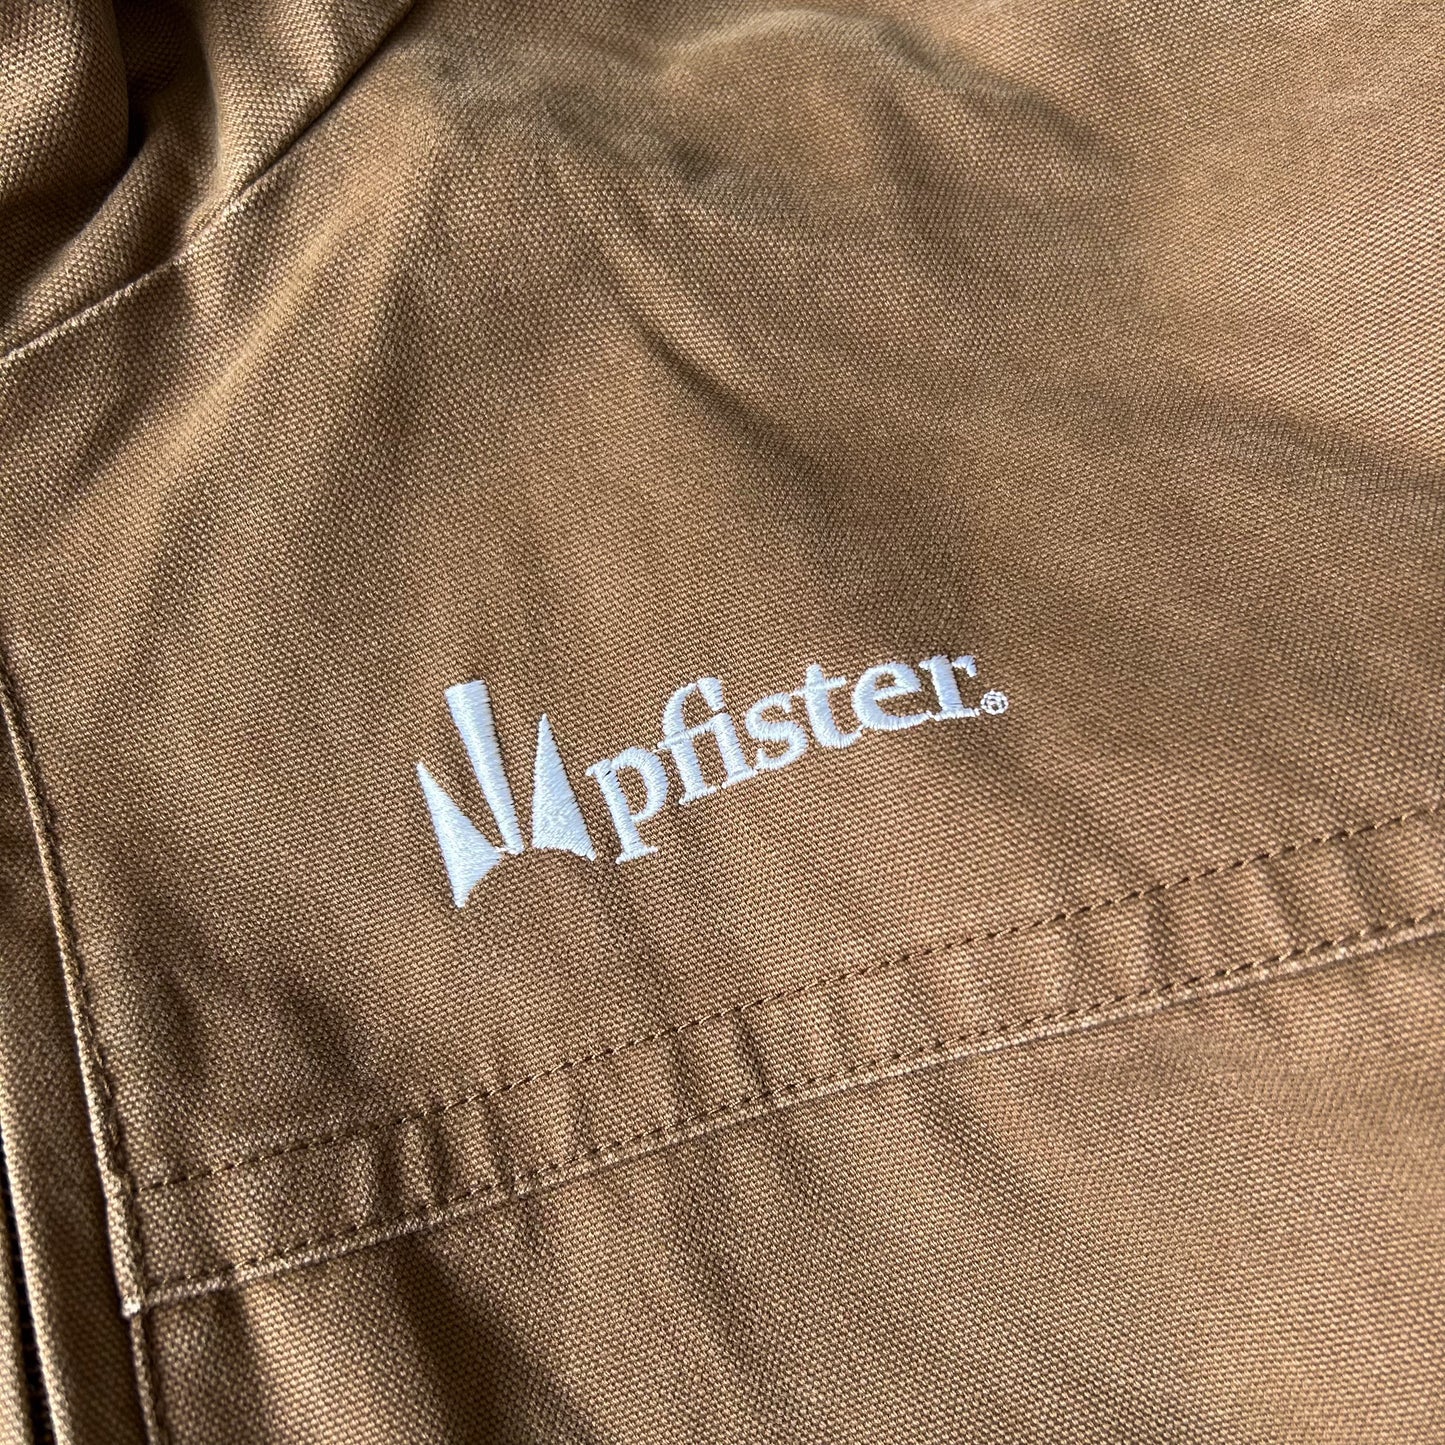 1990s - vintage 'pfister' embroidered work jacket